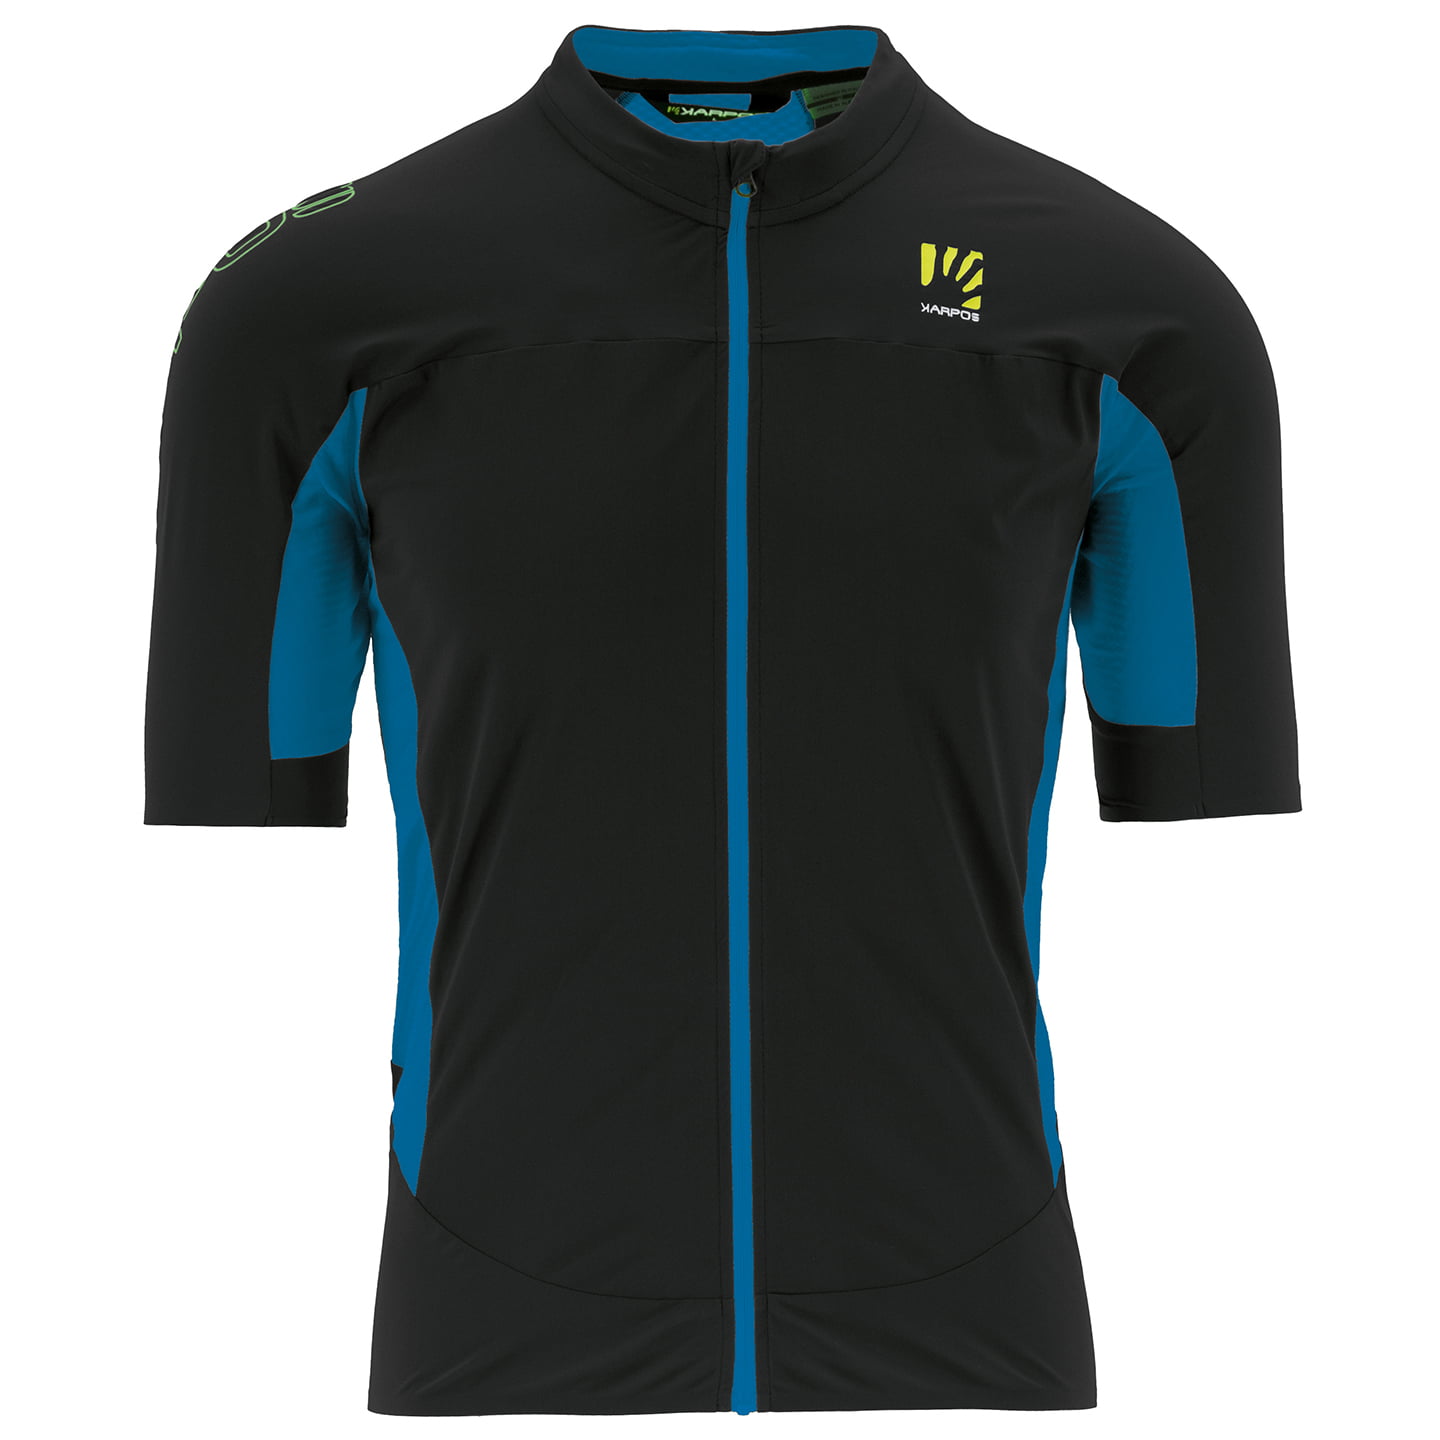 KARPOS Pralongia Short Sleeve Jersey, for men, size L, Cycling jersey, Cycling clothing